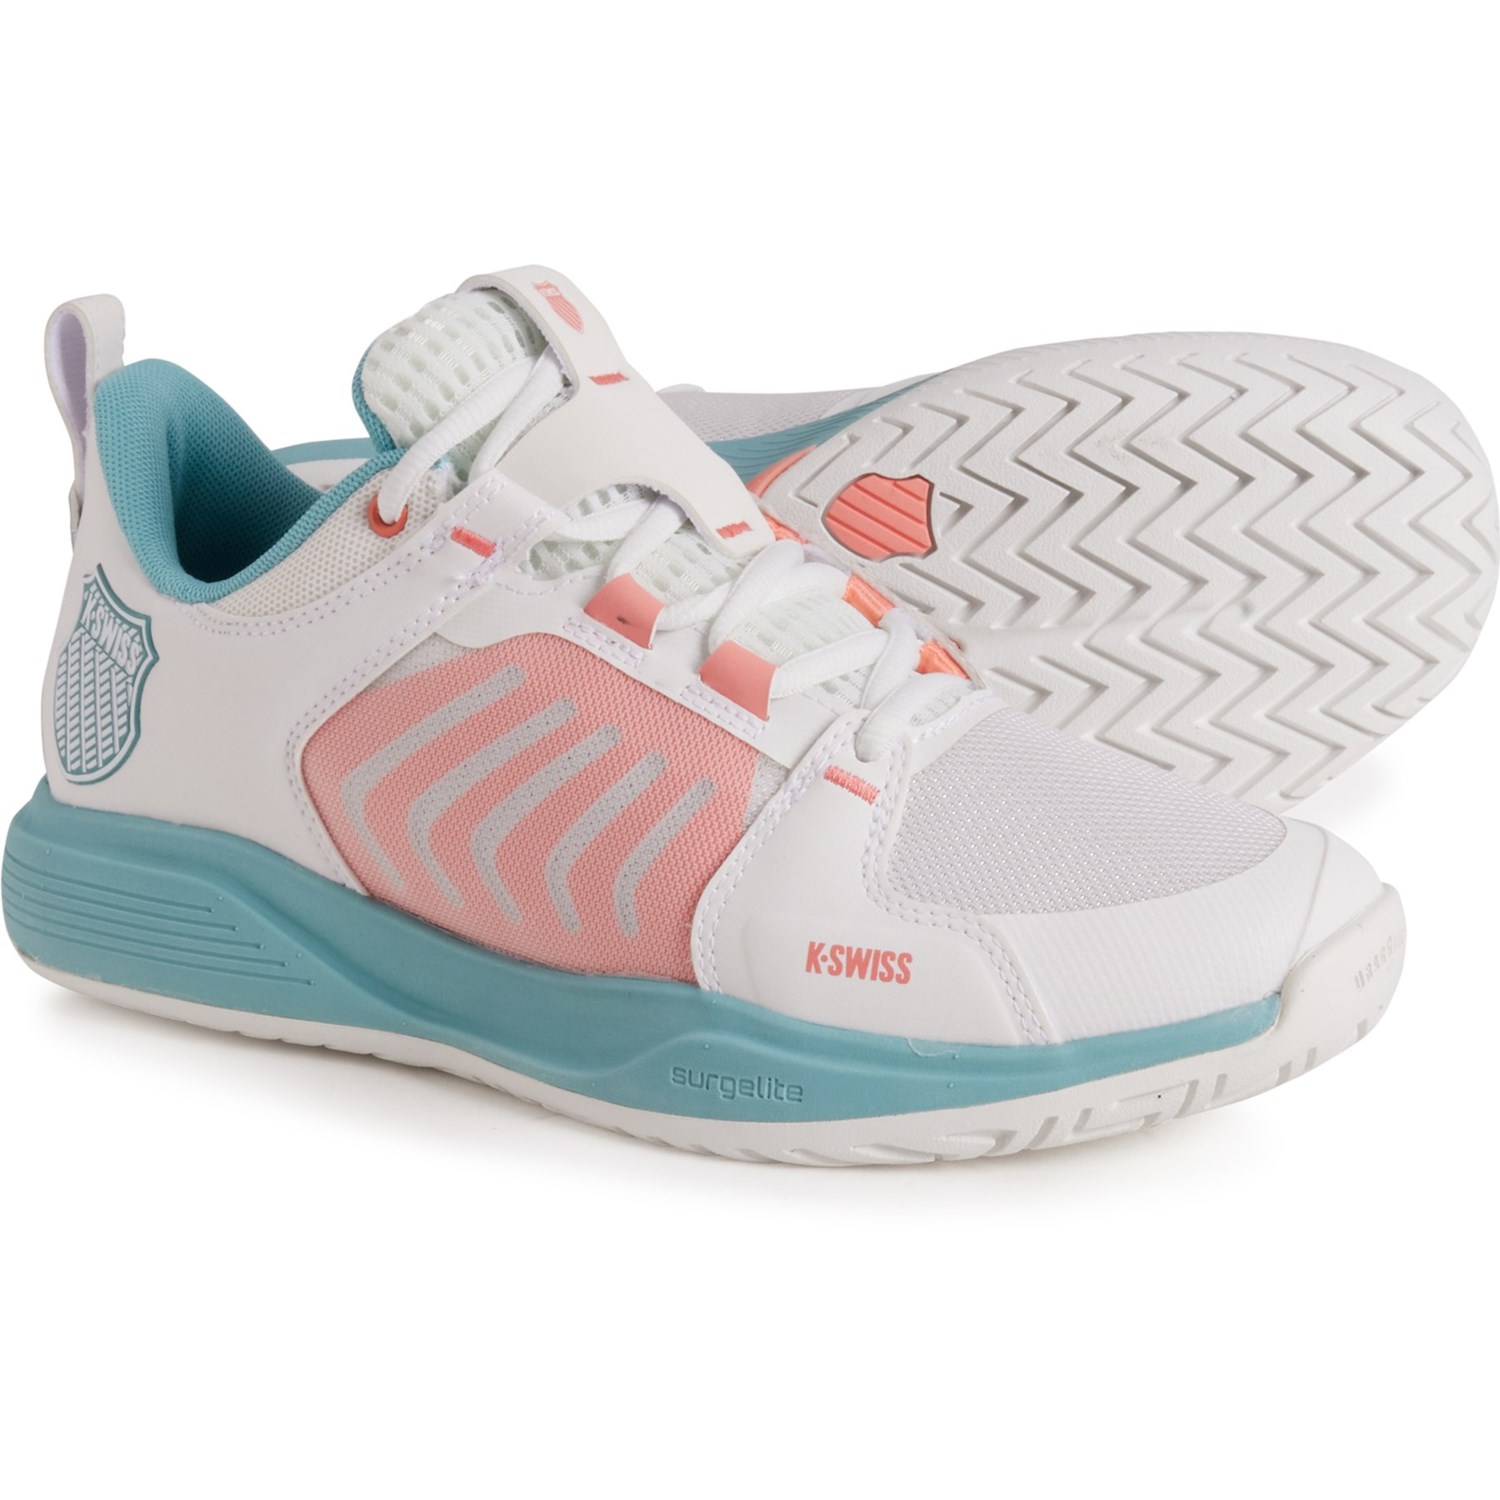 () P[XCX fB[X EgVbg `[ ejX V[Y K-Swiss women Ultrashot Team Tennis Shoes (For Women) White/Pink/Lt Blue